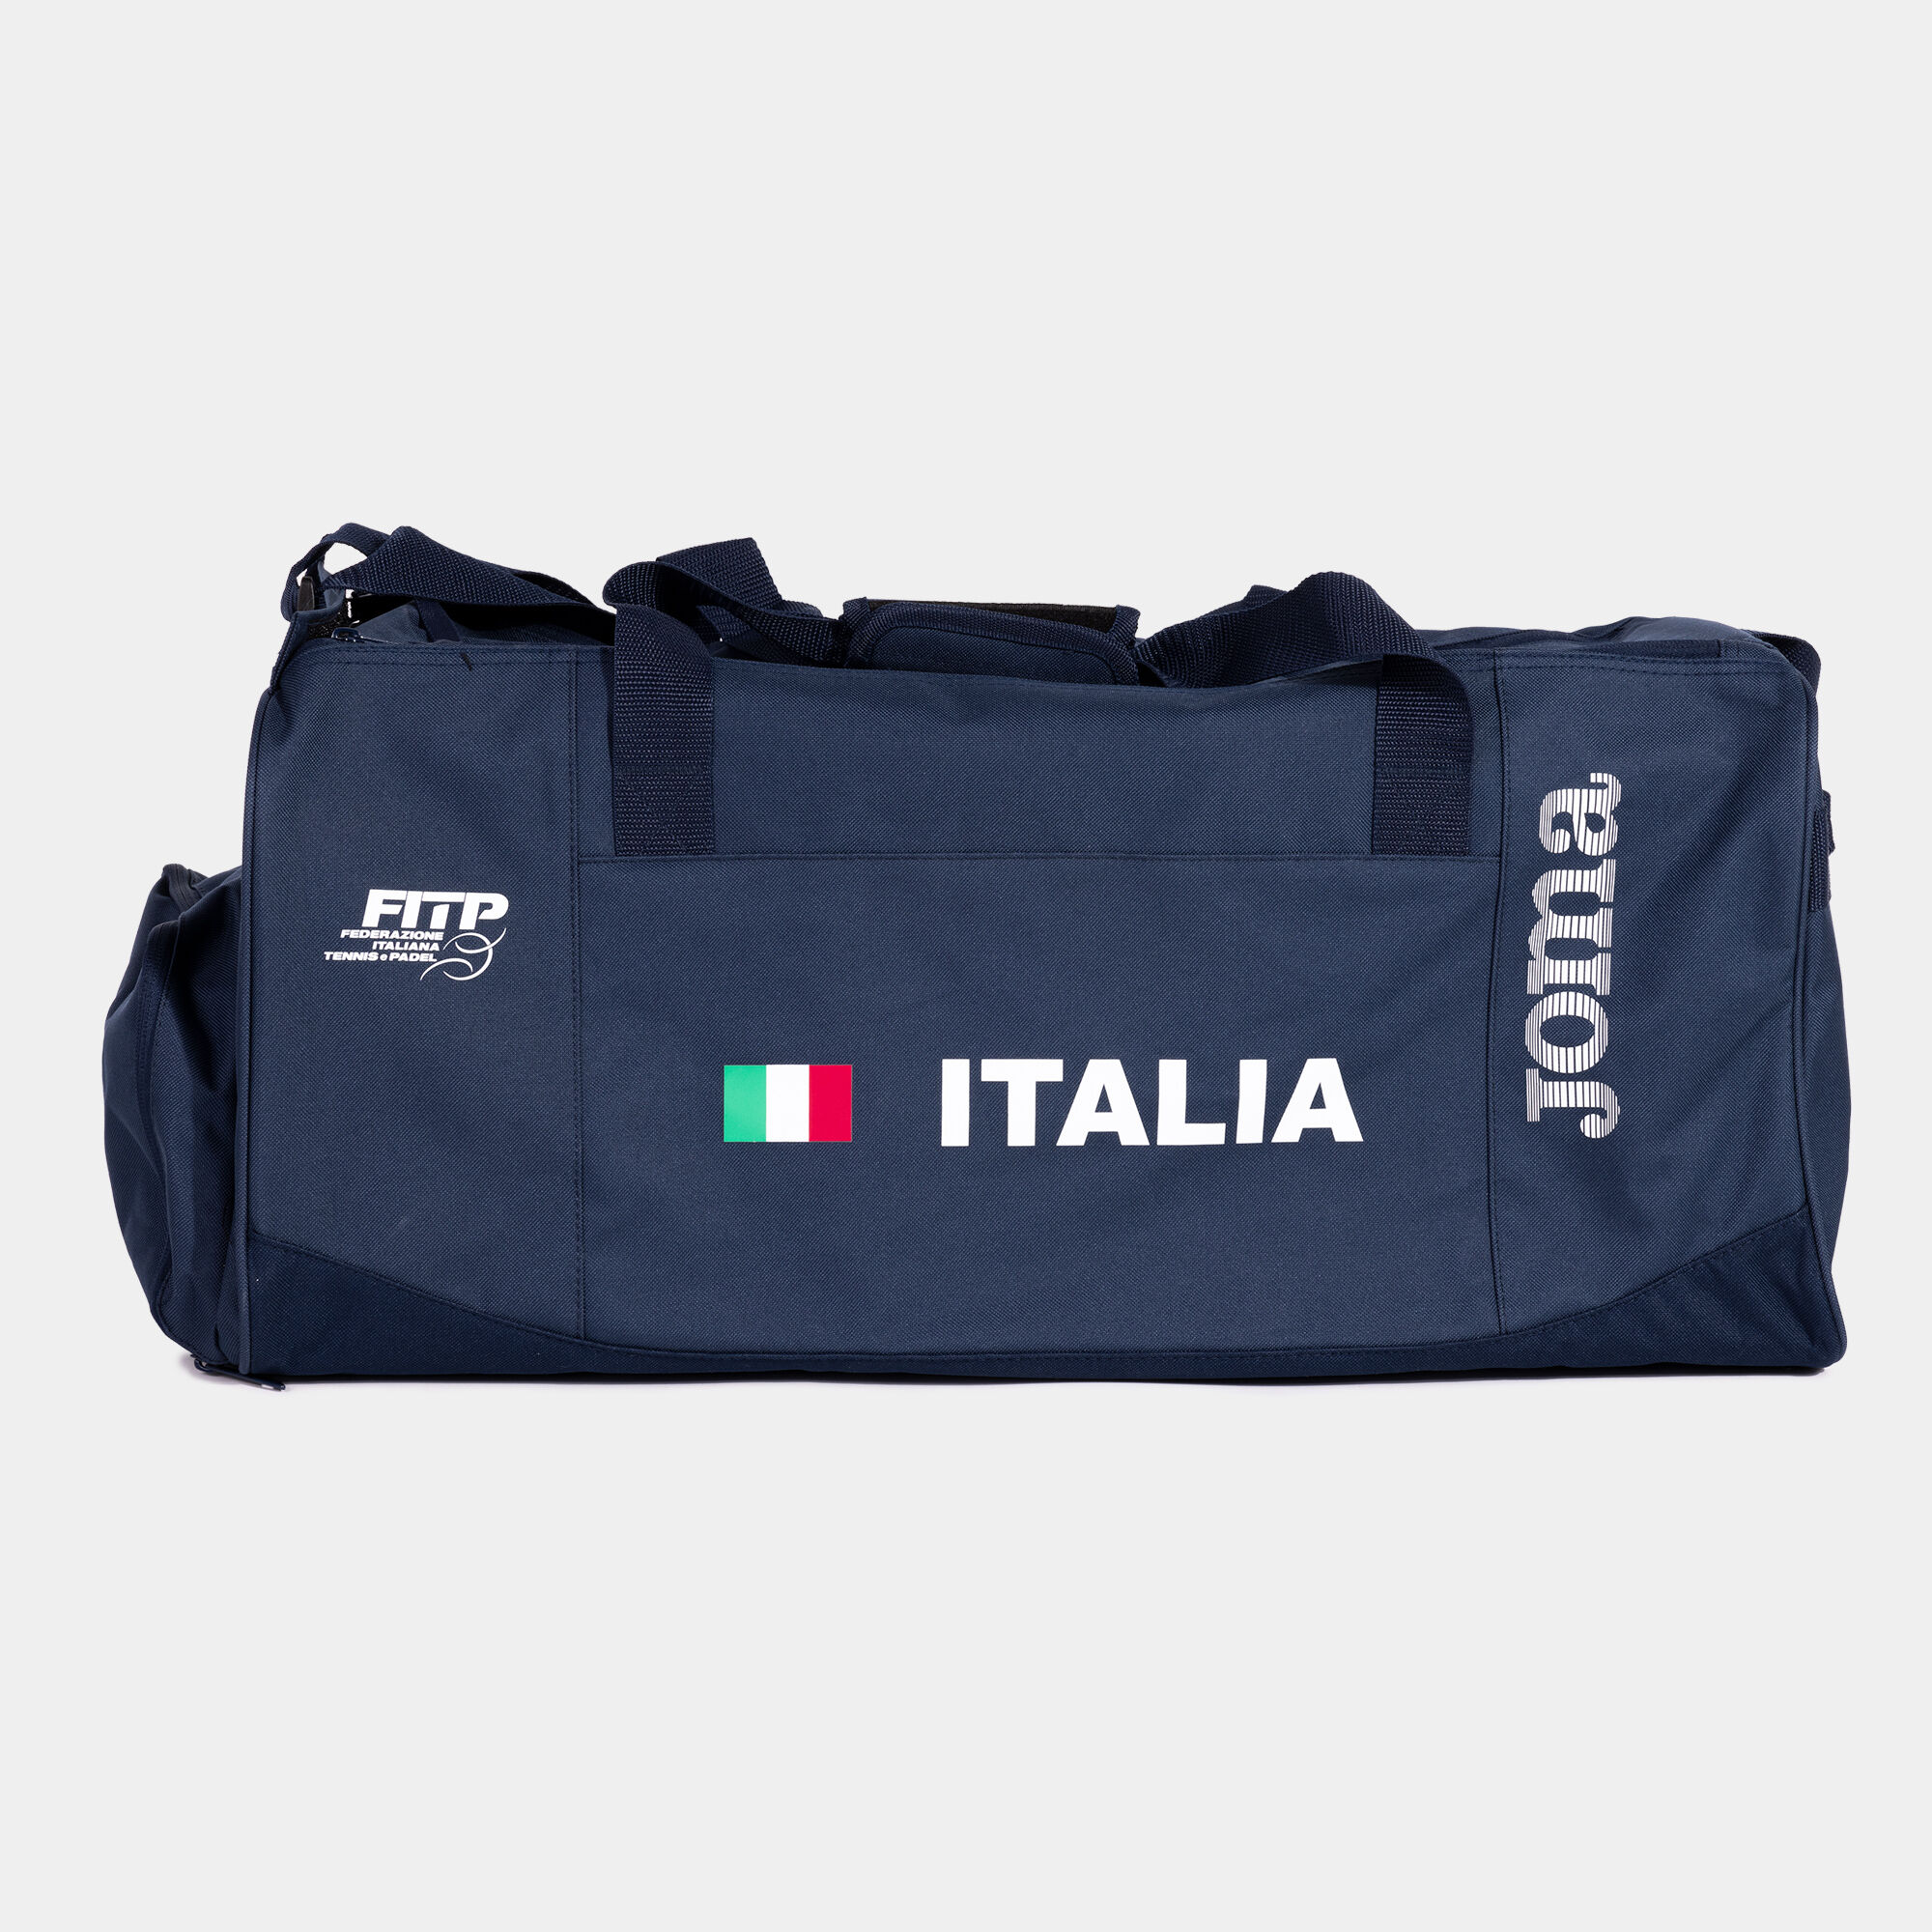 Sports bag Italian Tennis And Padel Federation